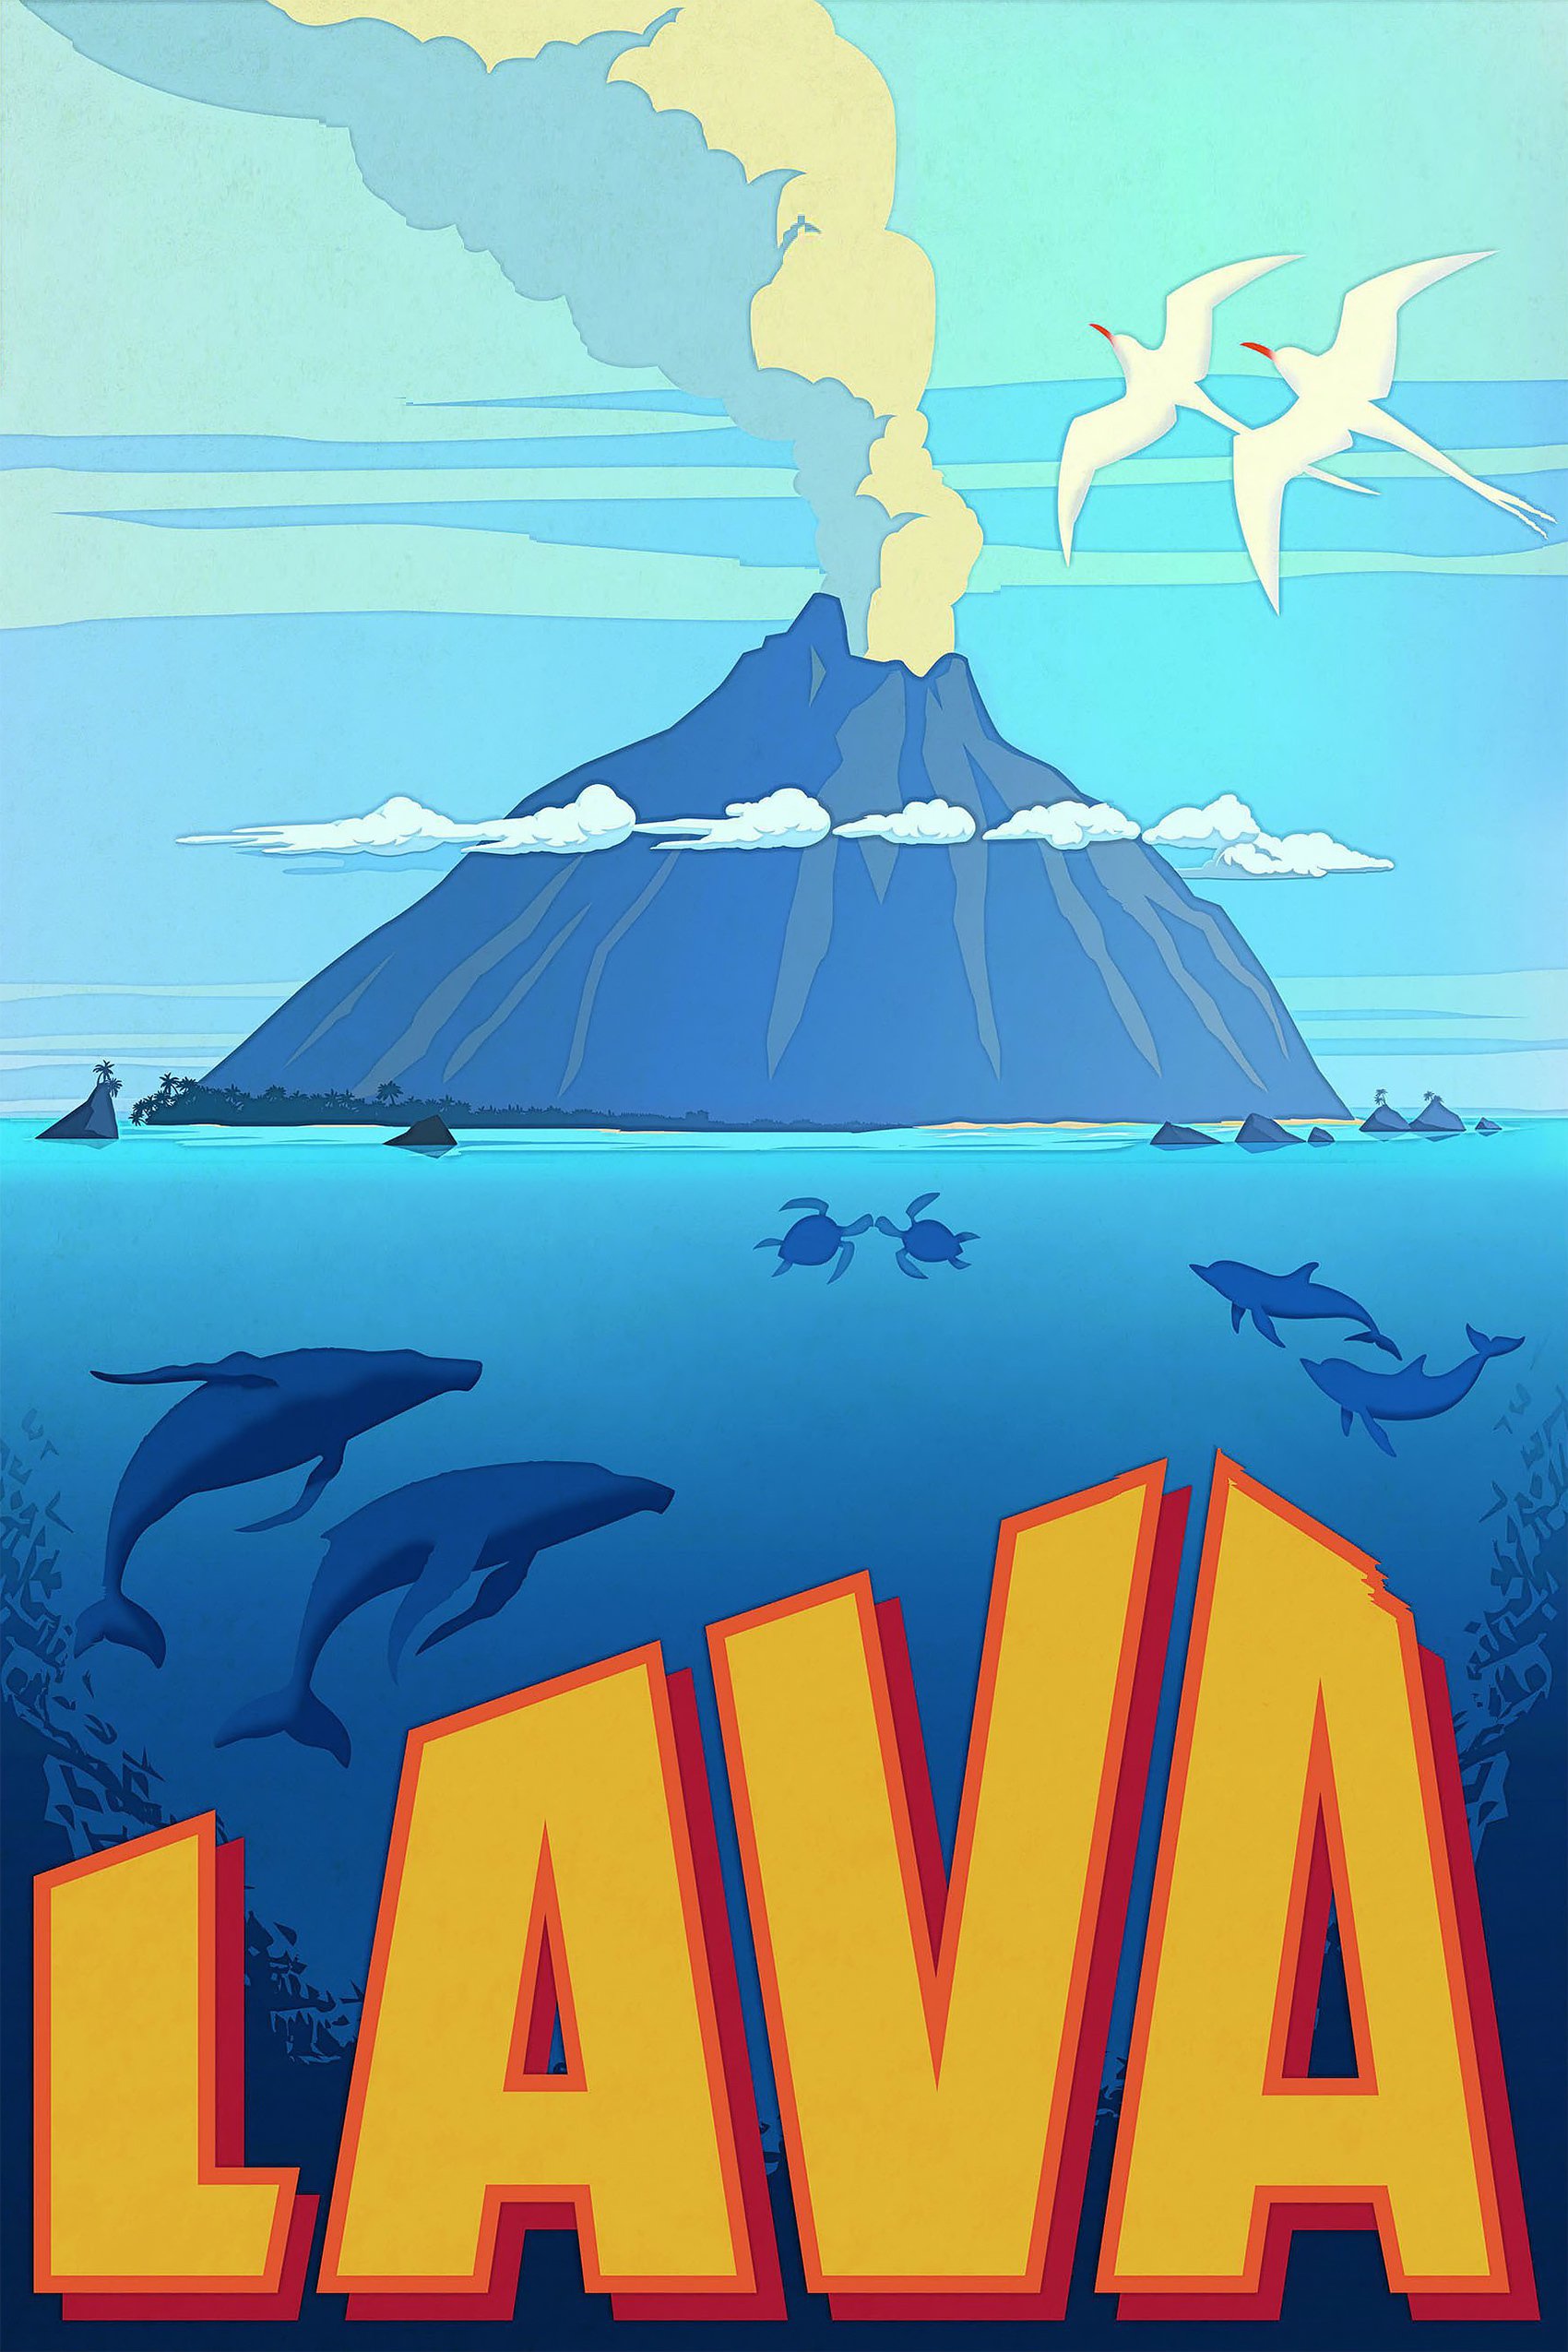 Plakat von "Lava"